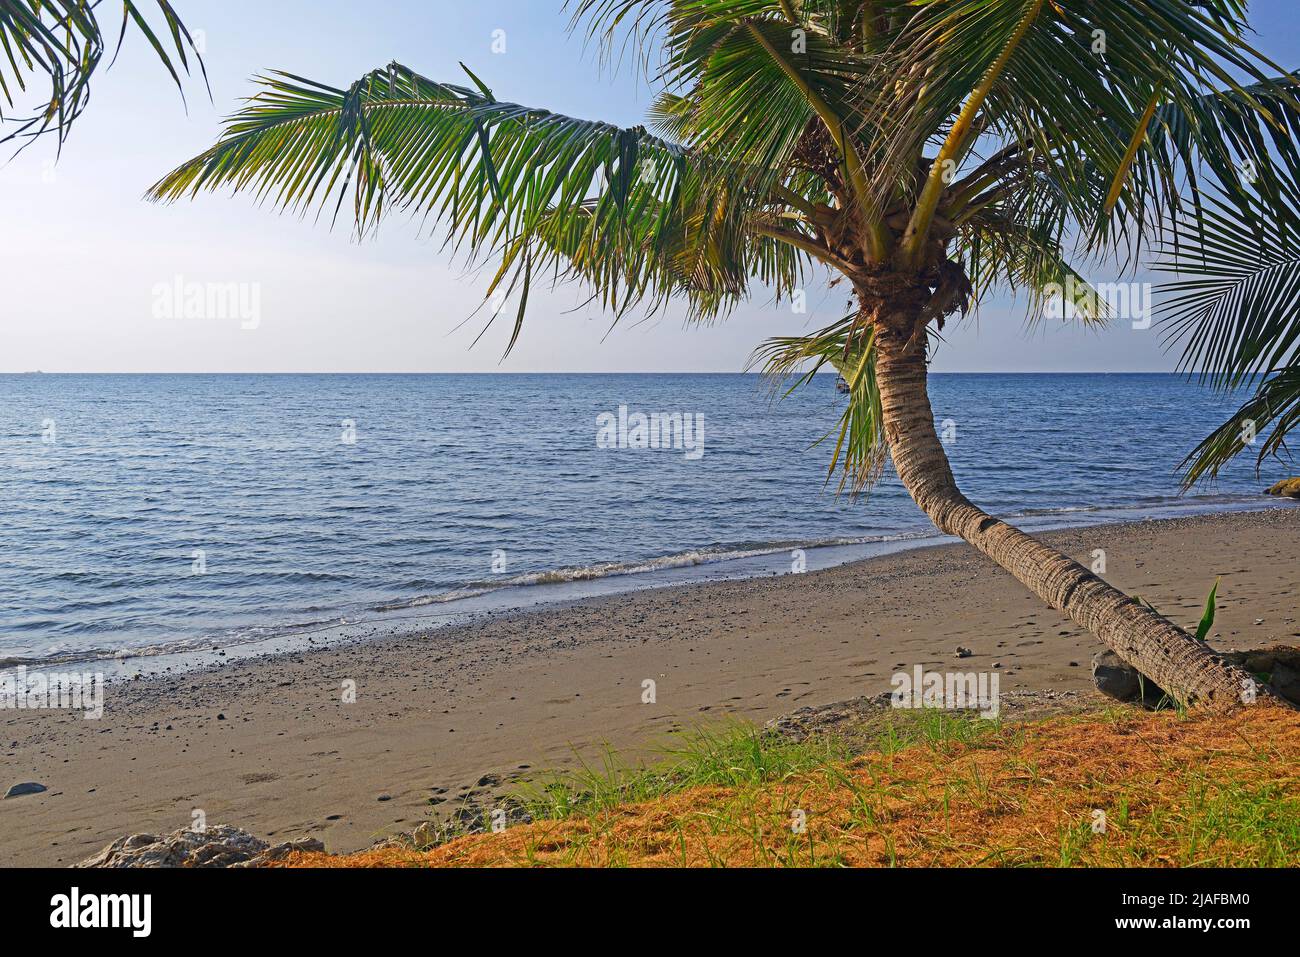 coconut palm (Cocos nucifera), on the black lava beach of Lovina, Indonesia, Bali Stock Photo